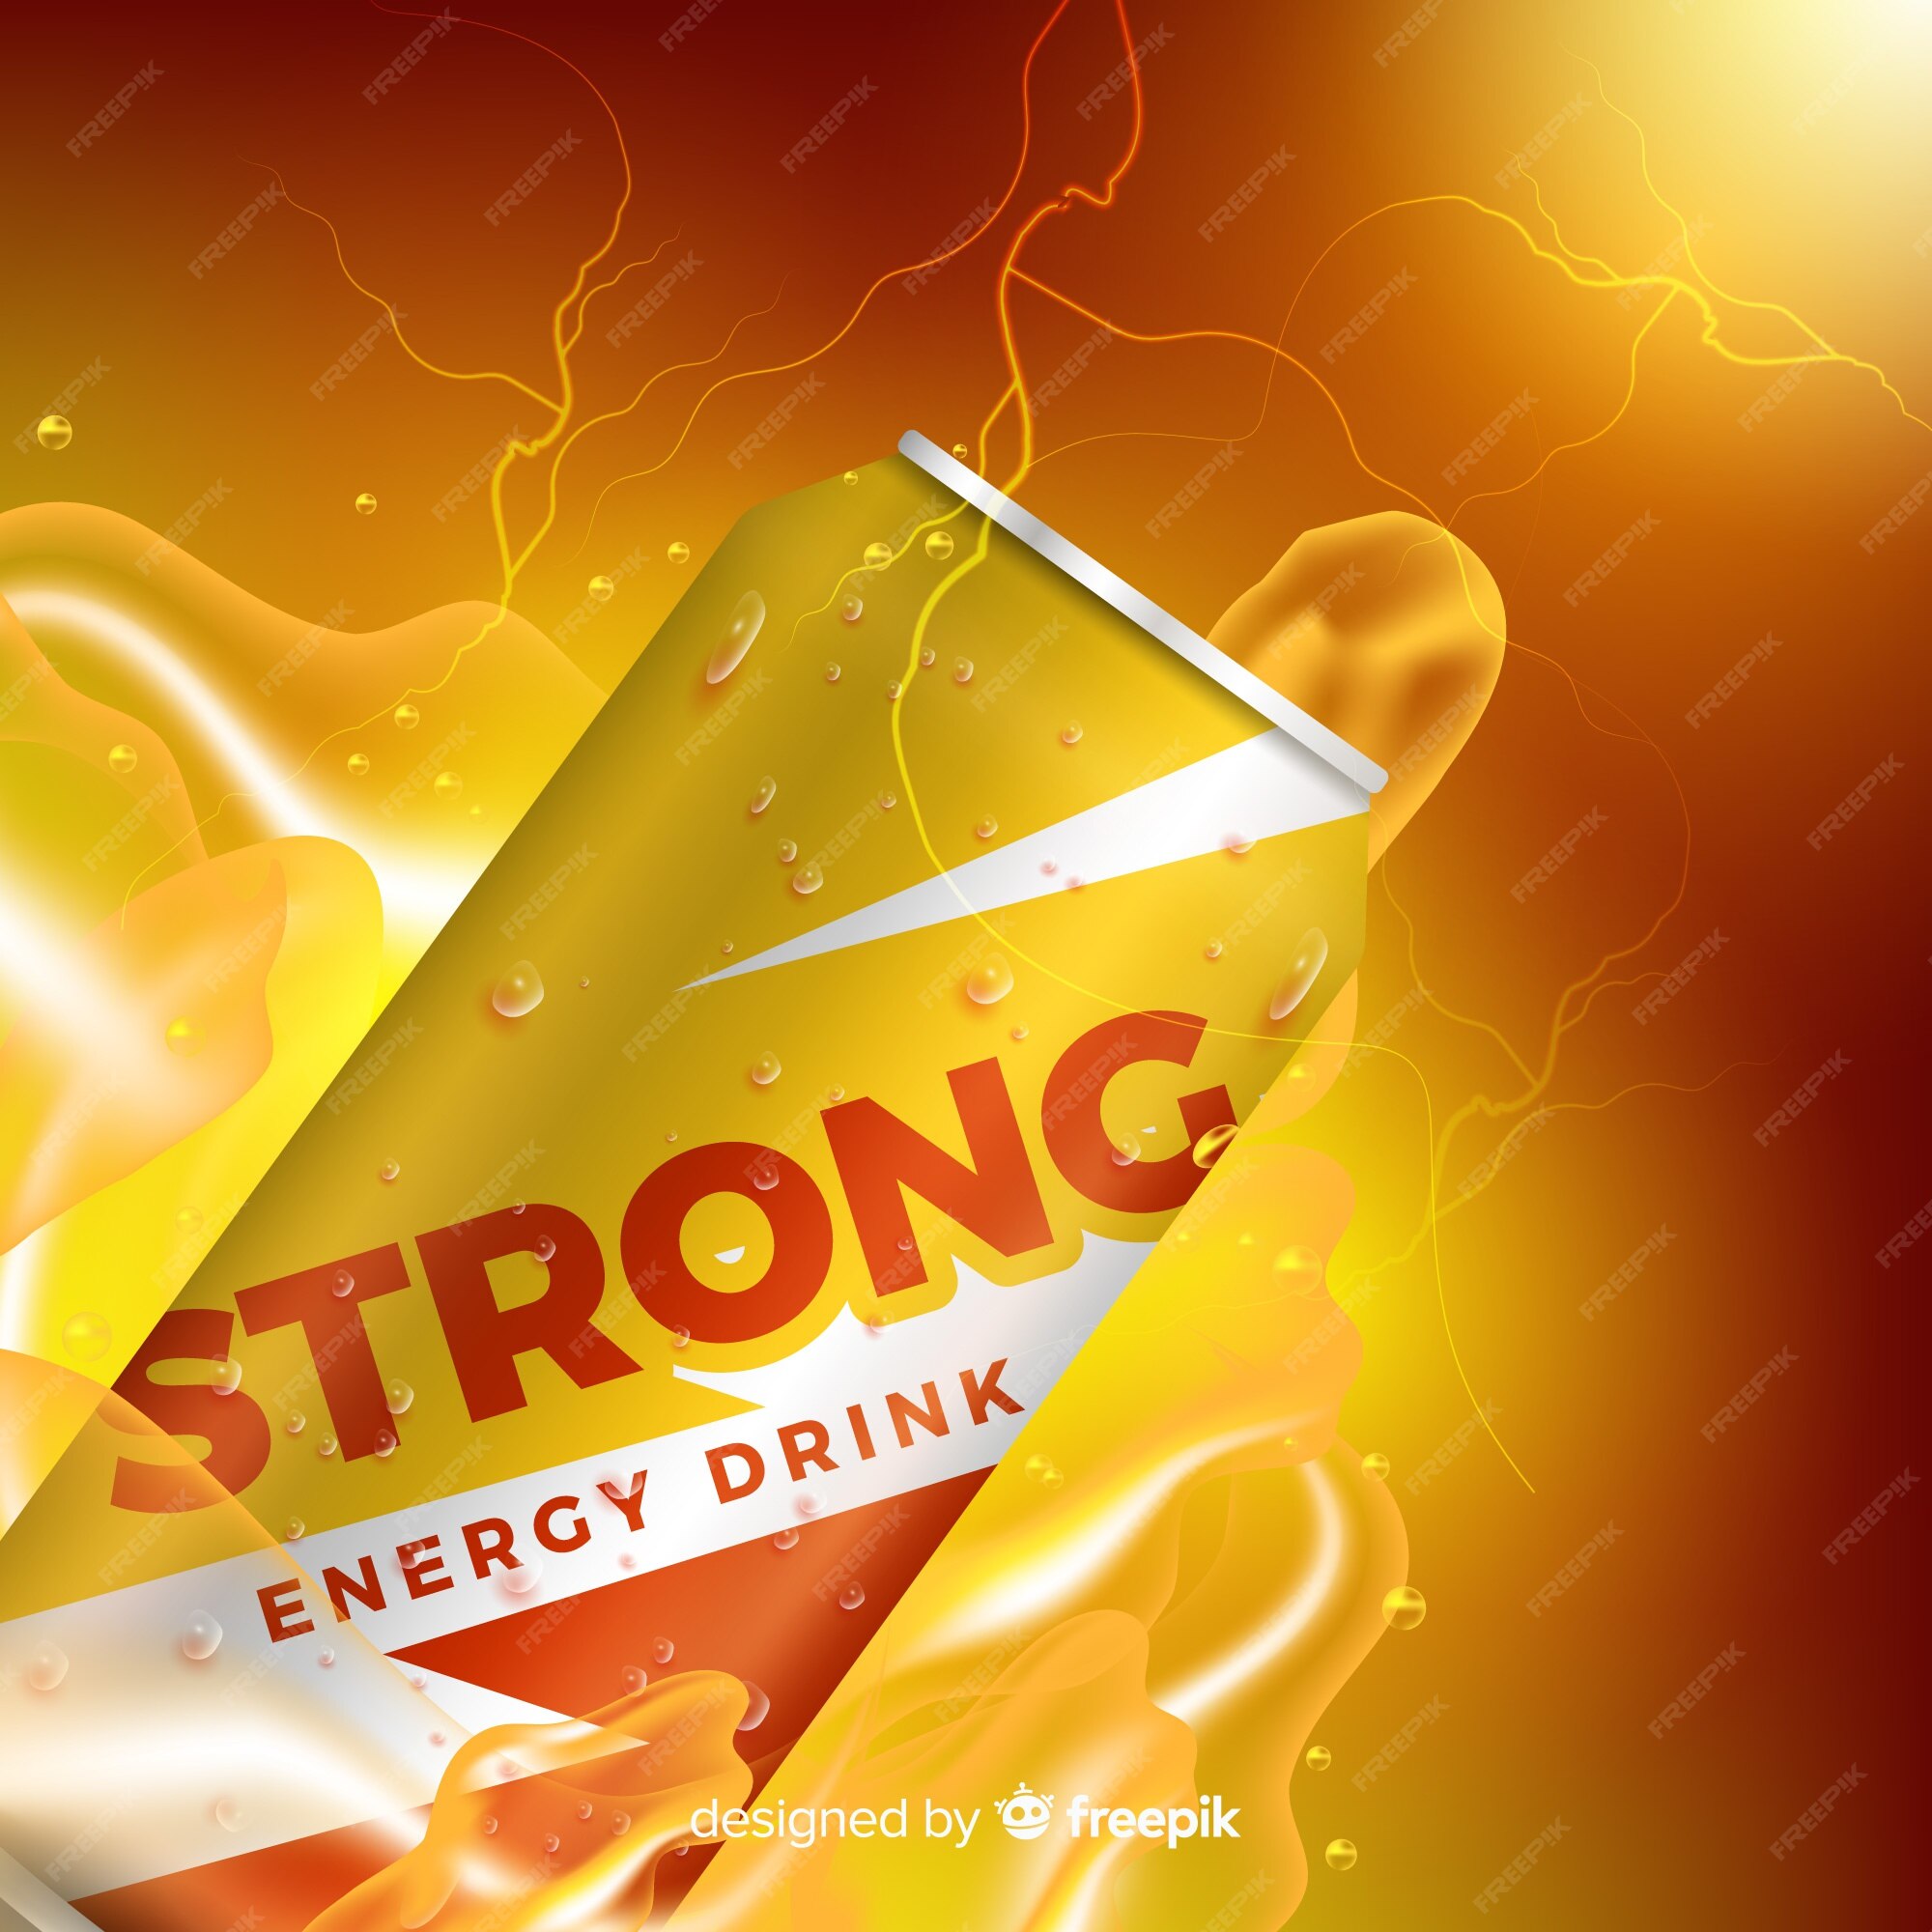 Energy drink background Vectors & Illustrations for Free Download | Freepik